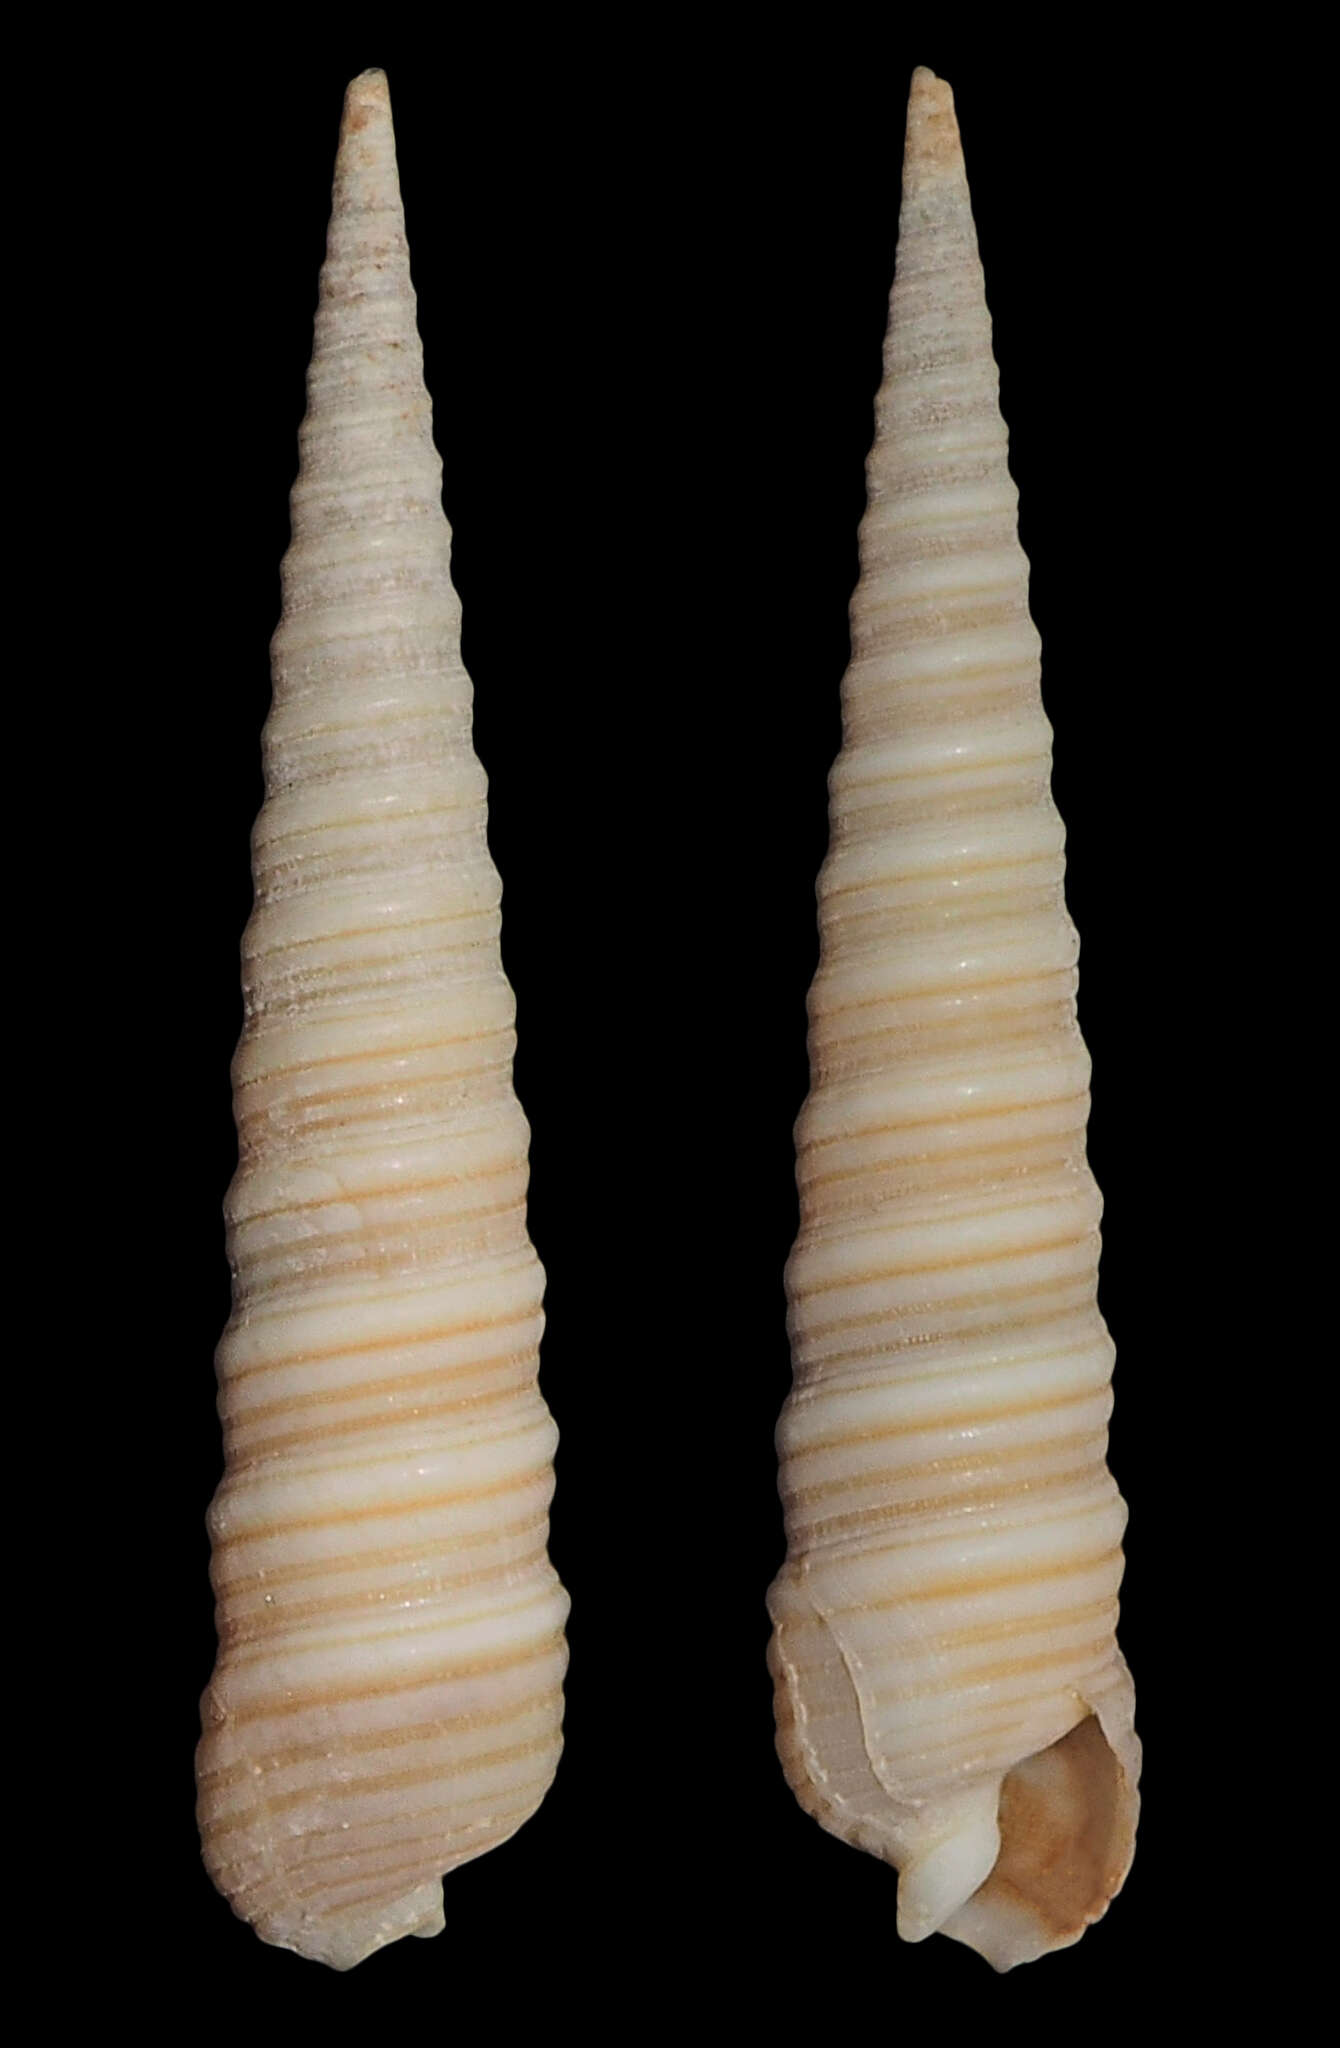 Image of Terebra funiculata Hinds 1844